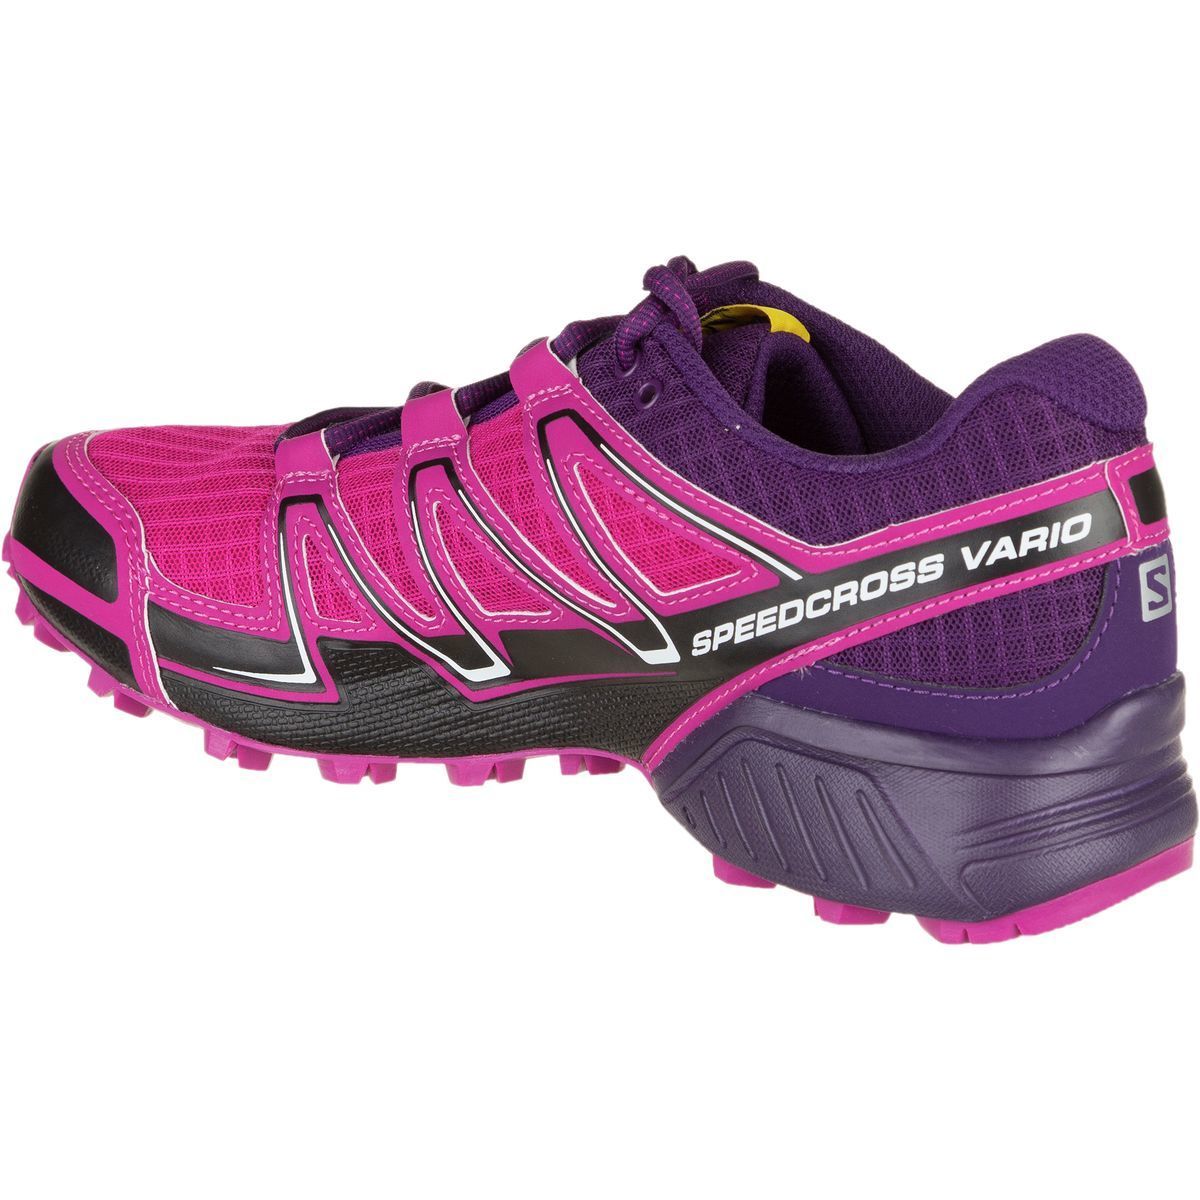 bluse Konsekvent ambition Salomon Speedcross Vario Trail Running Shoe - Women's - Footwear